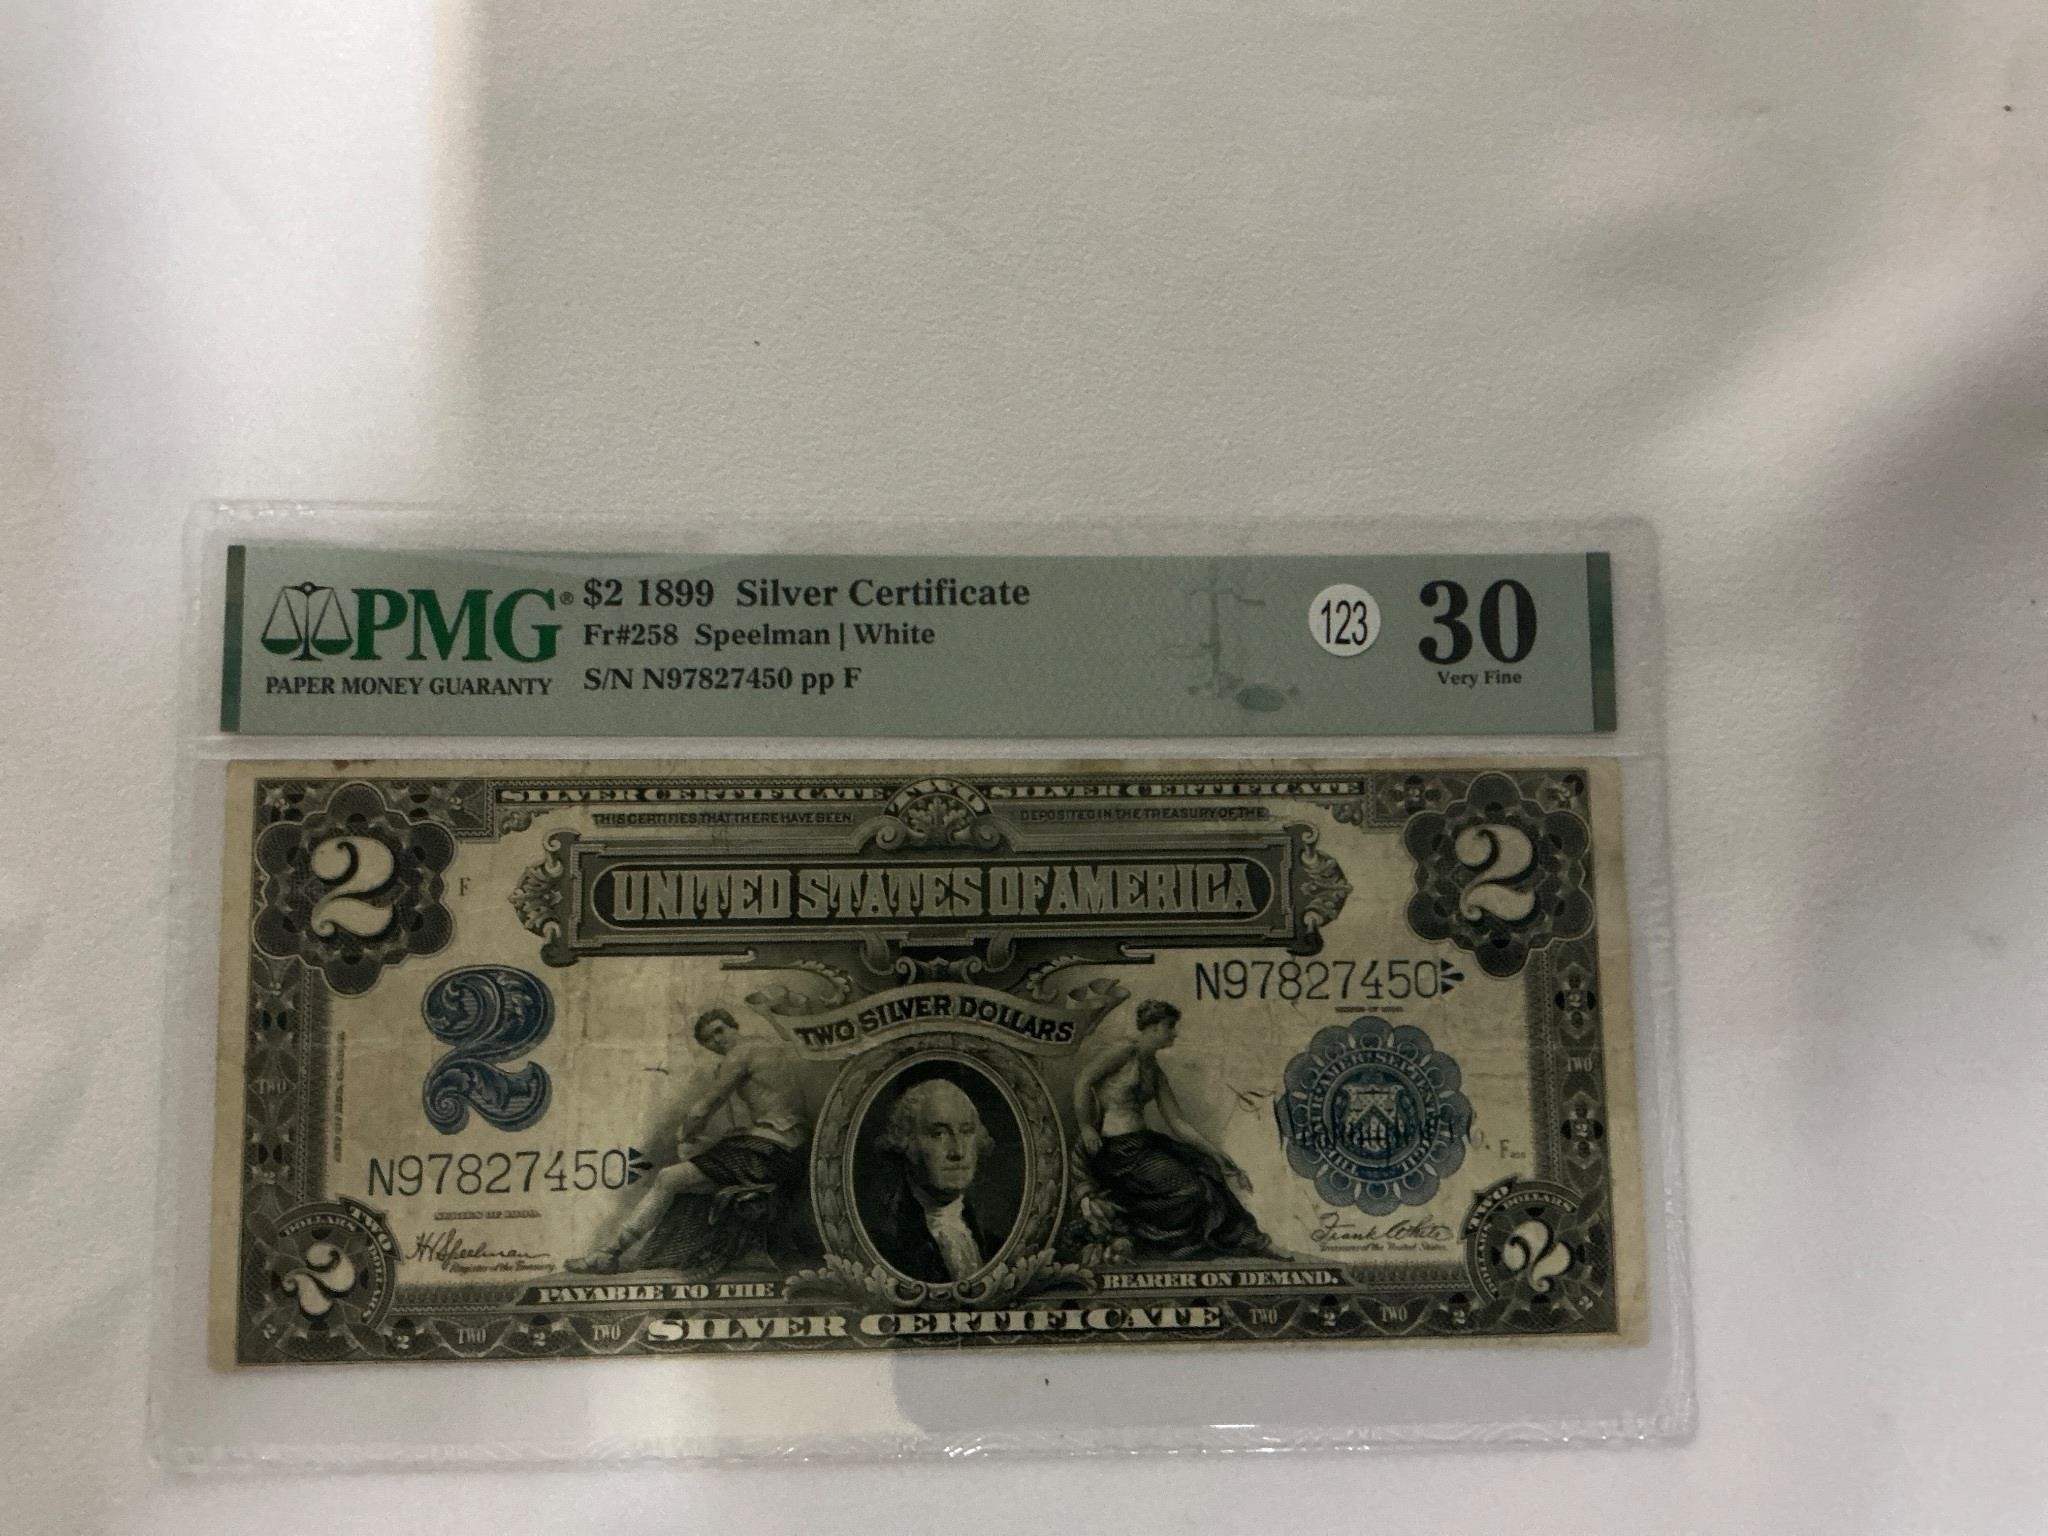 $2 1899 Silver Certificate Graded